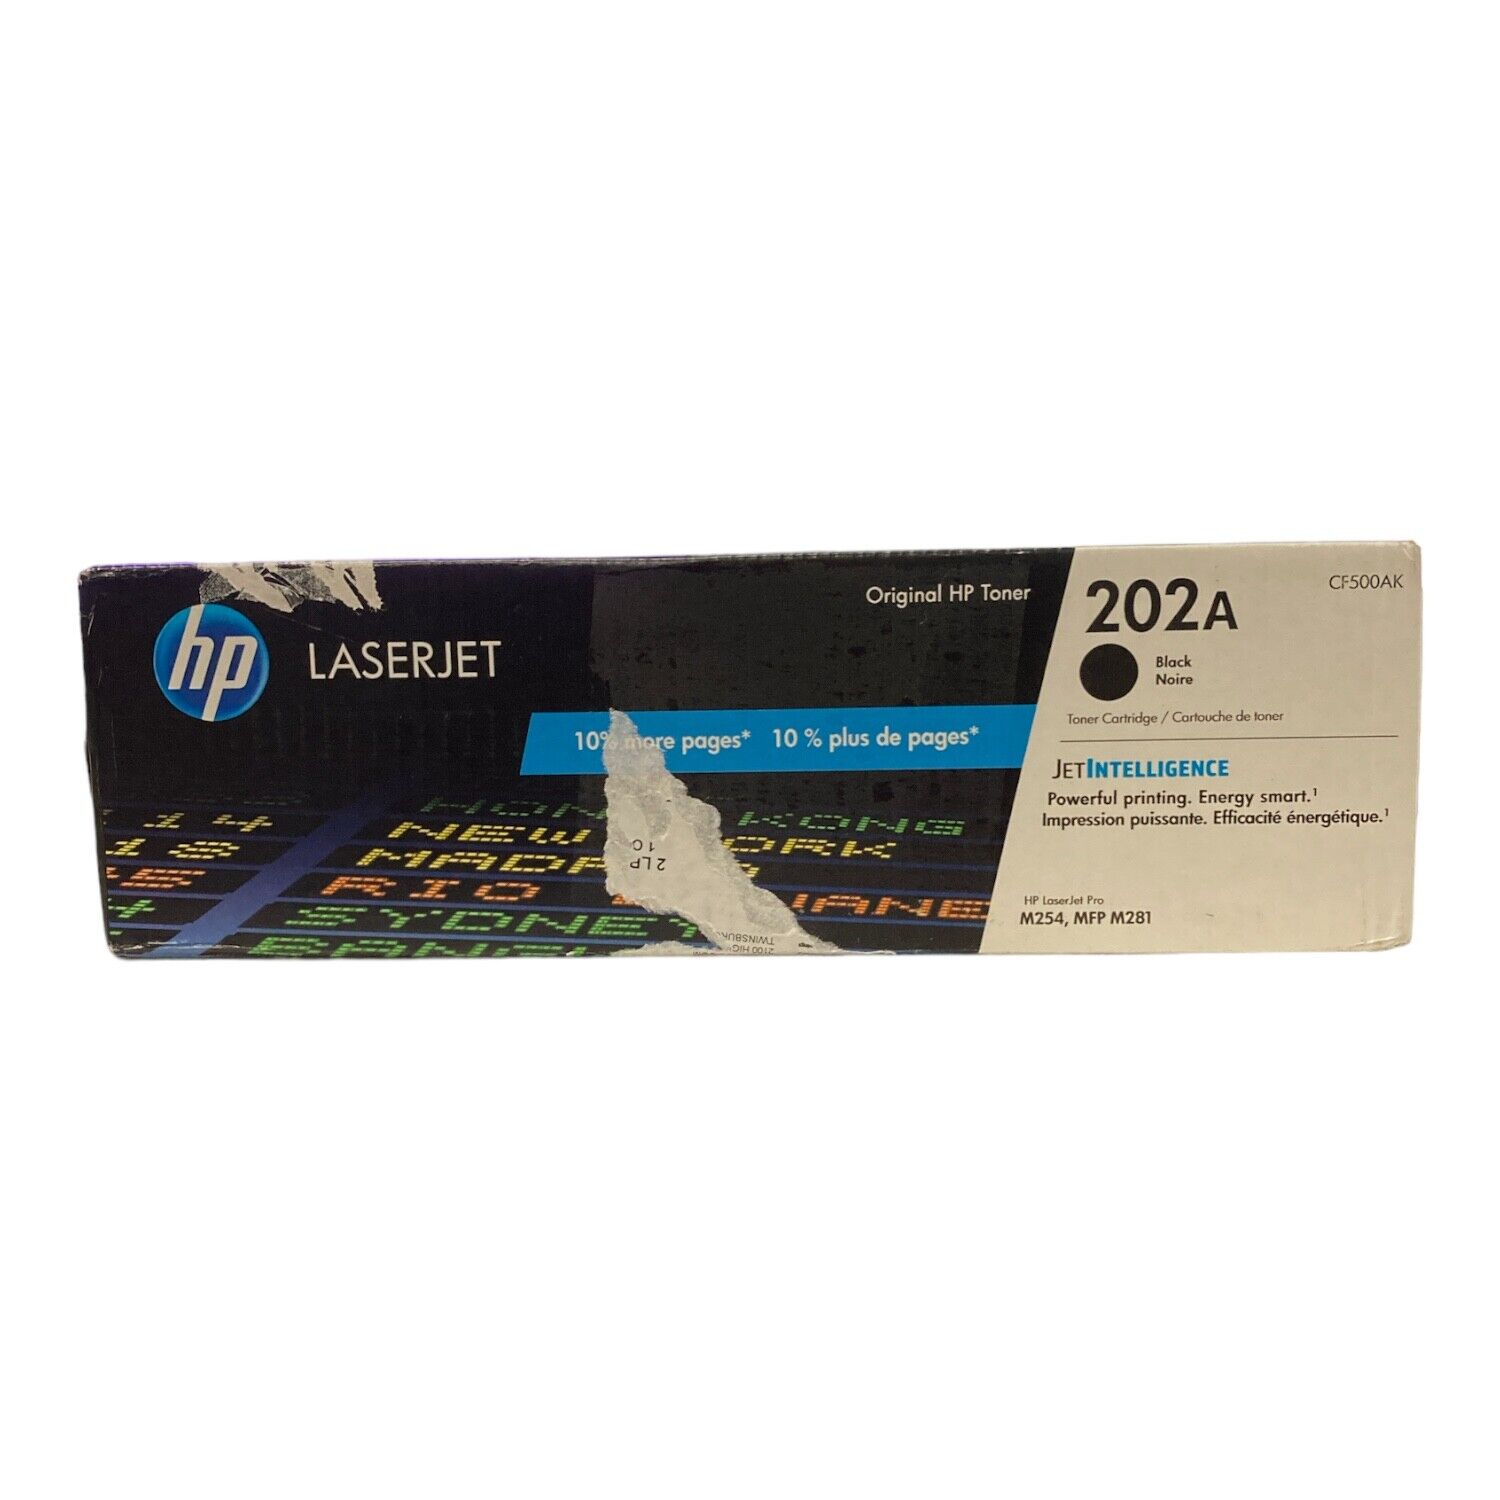 HP Genuine LaserJet 202A Black Toner Cartridge Original CF500A